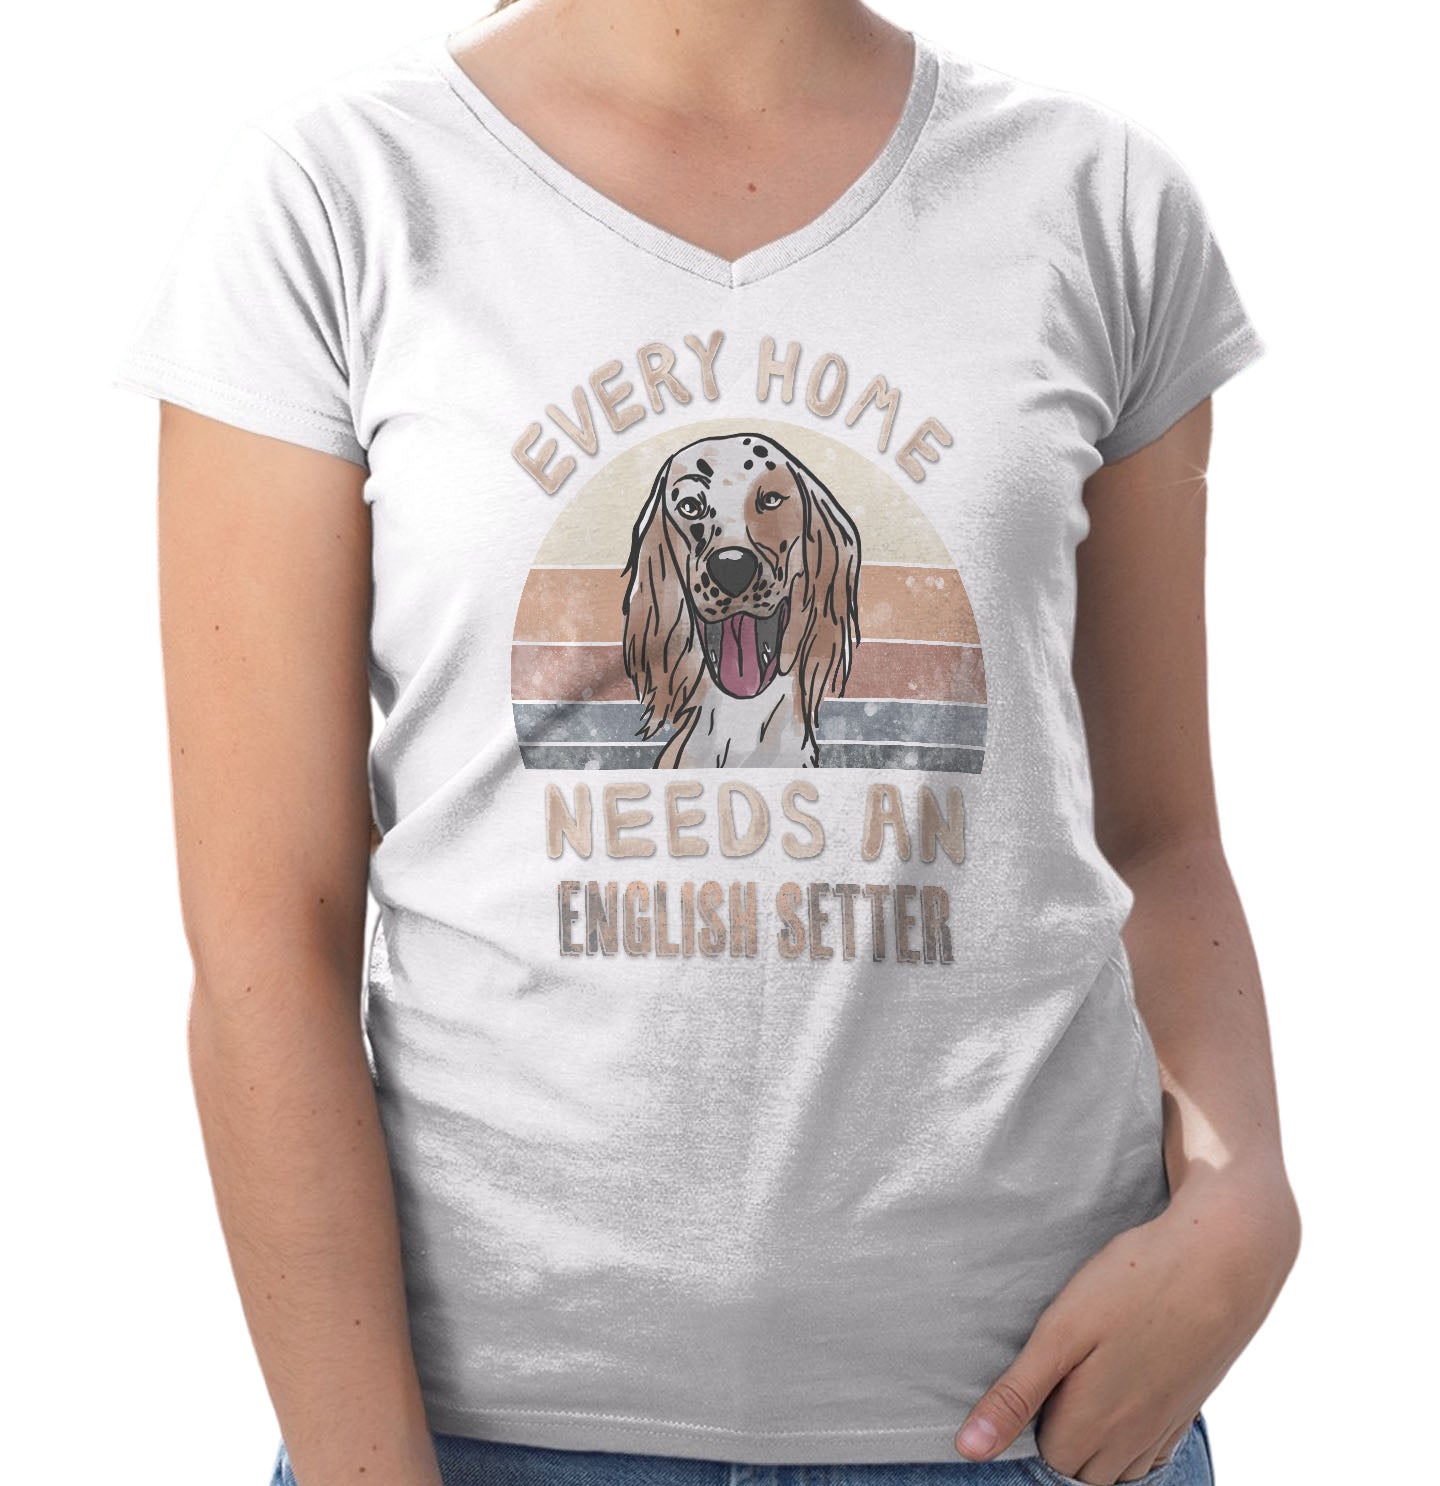 Every Home Needs a English Setter - Women's V-Neck T-Shirt